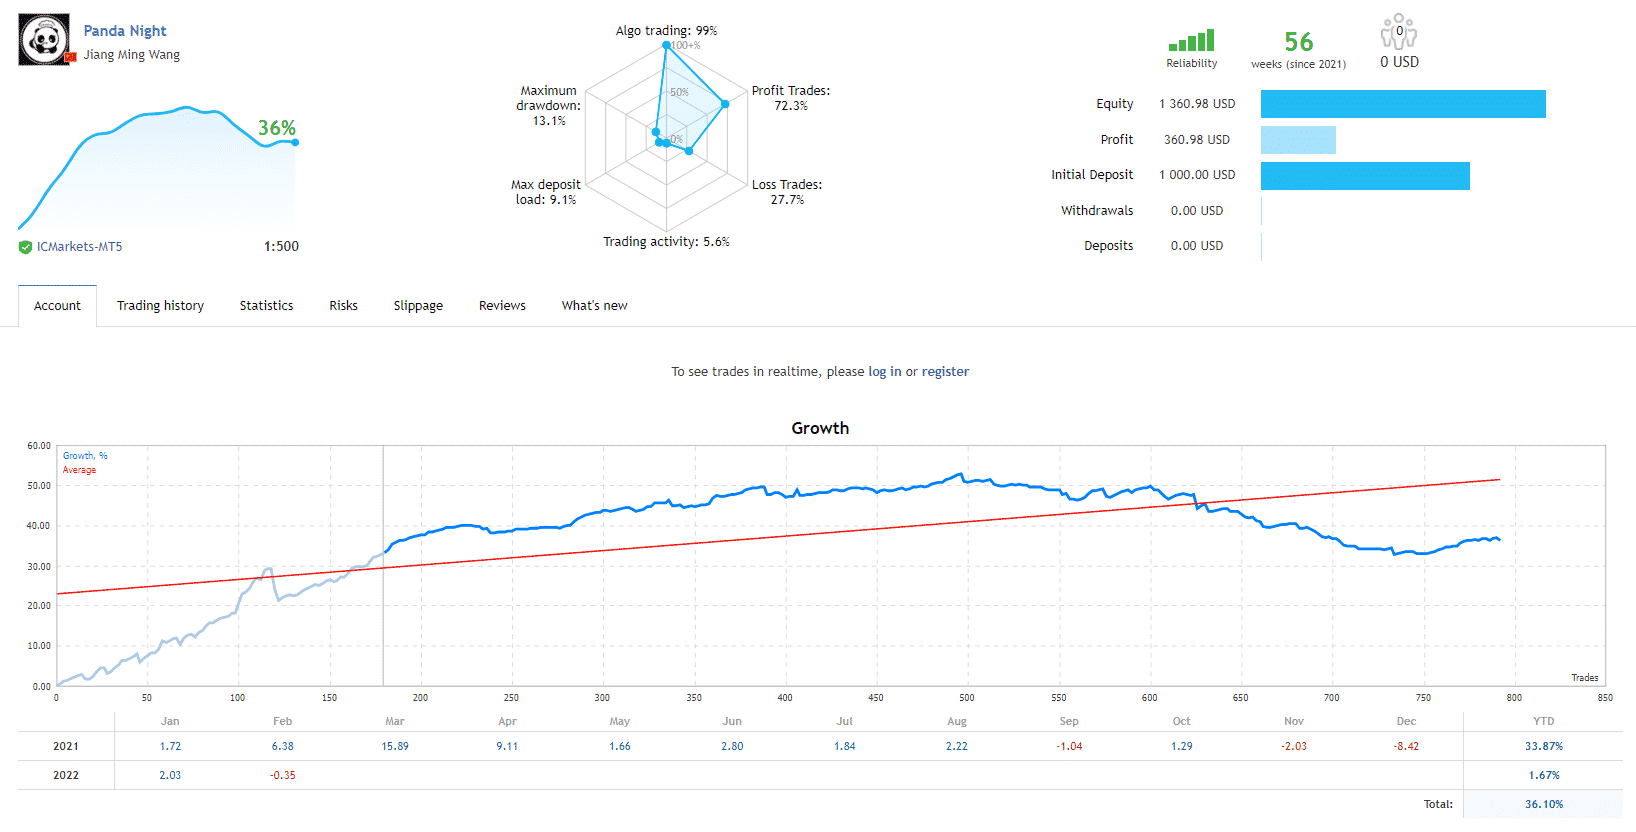 Growth chart of Panda Night on MQL5